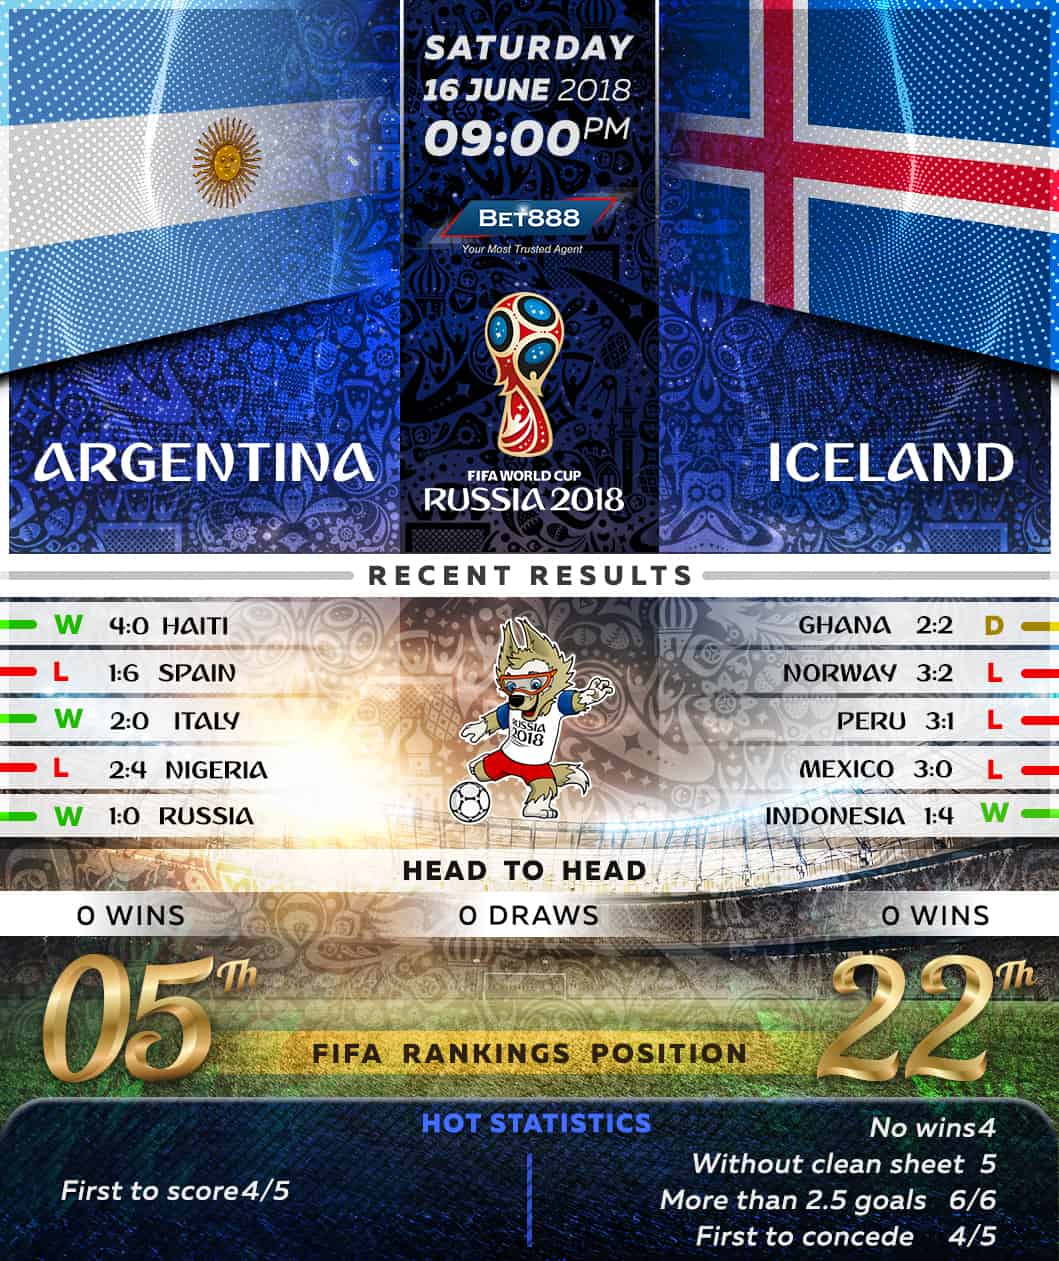 Argentina vs Iceland 16/06/18